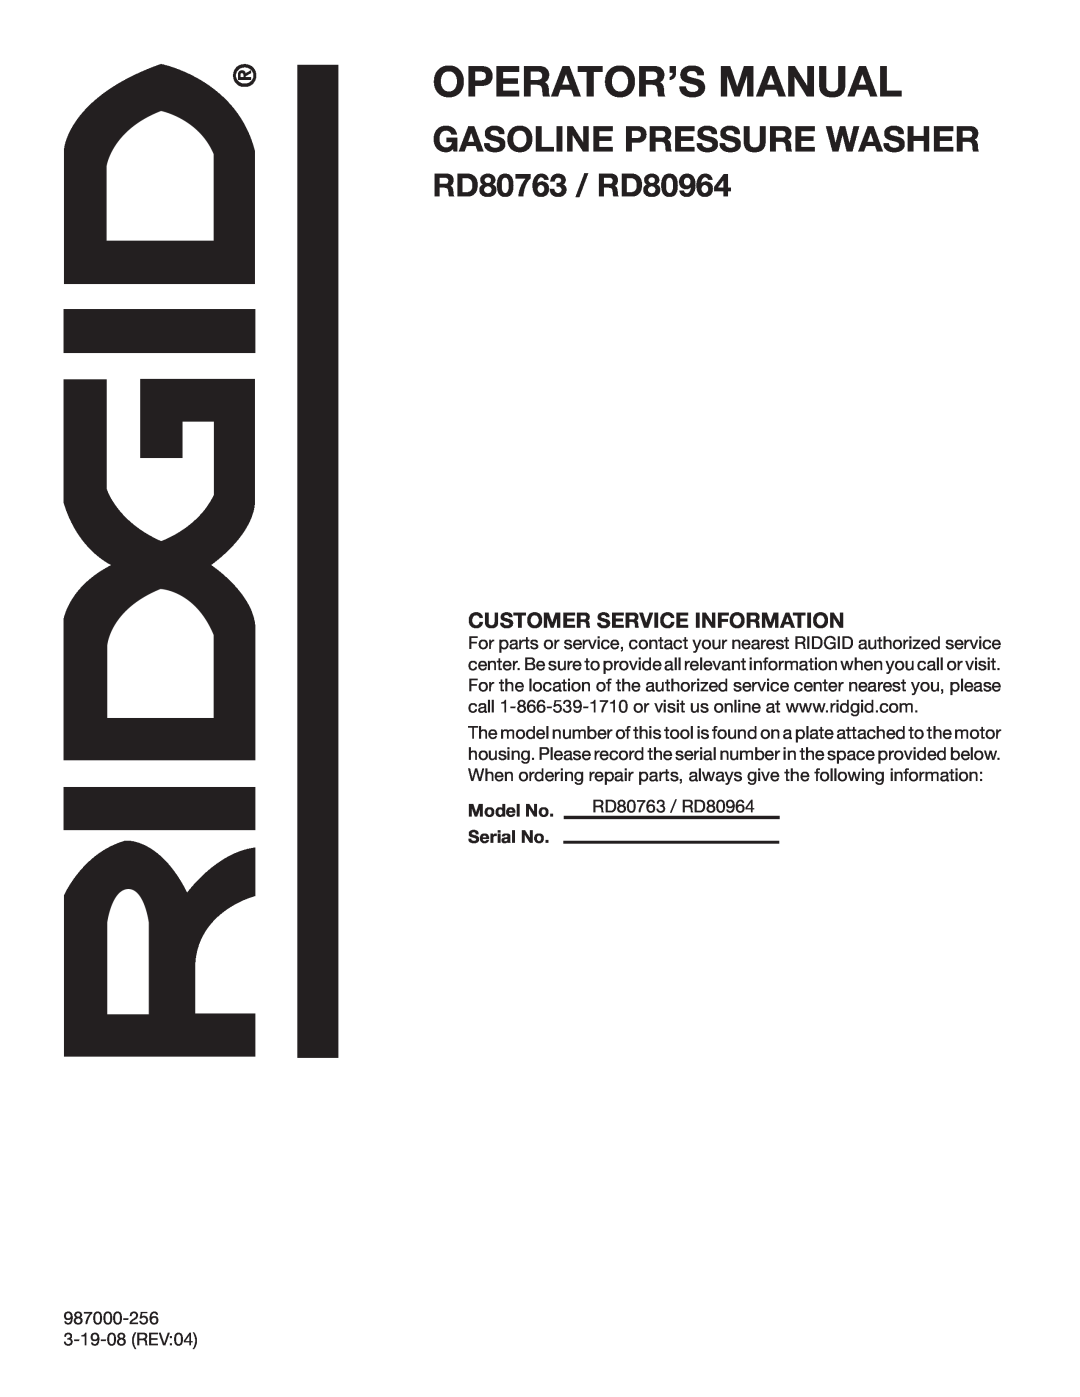 RIDGID manual RD80763 / RD80964, Customer Service Information, Model No, Serial No, Operator’S Manual 